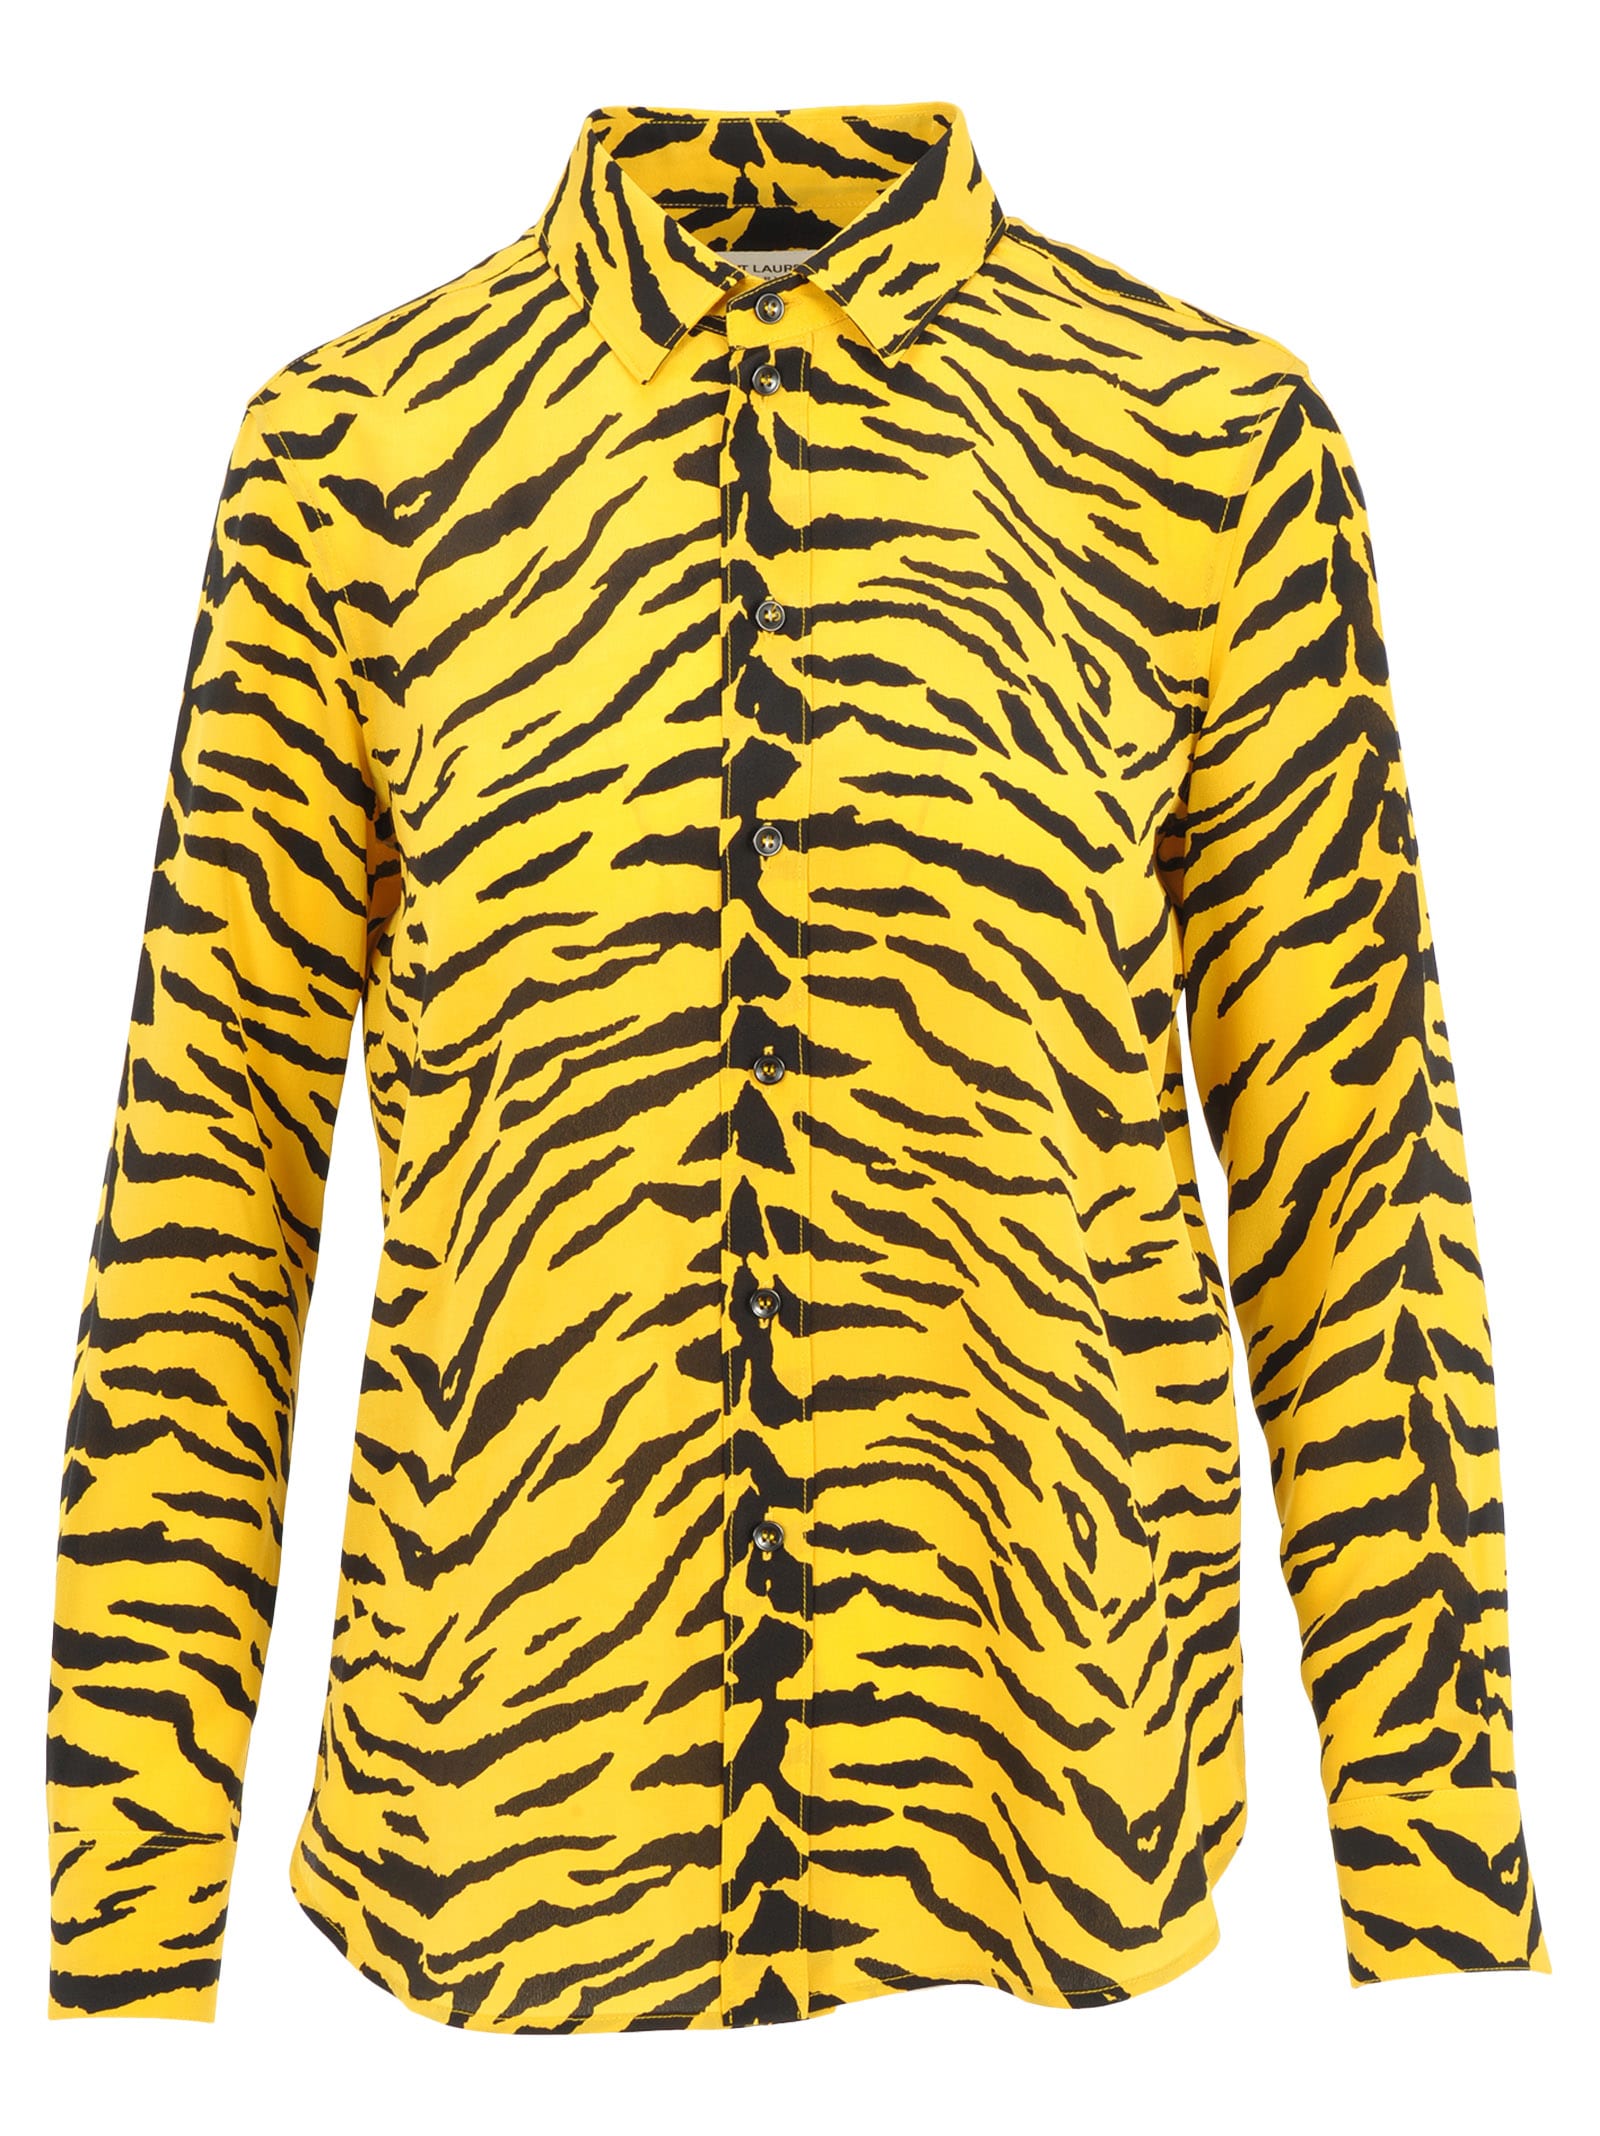 yellow and black tiger print dress